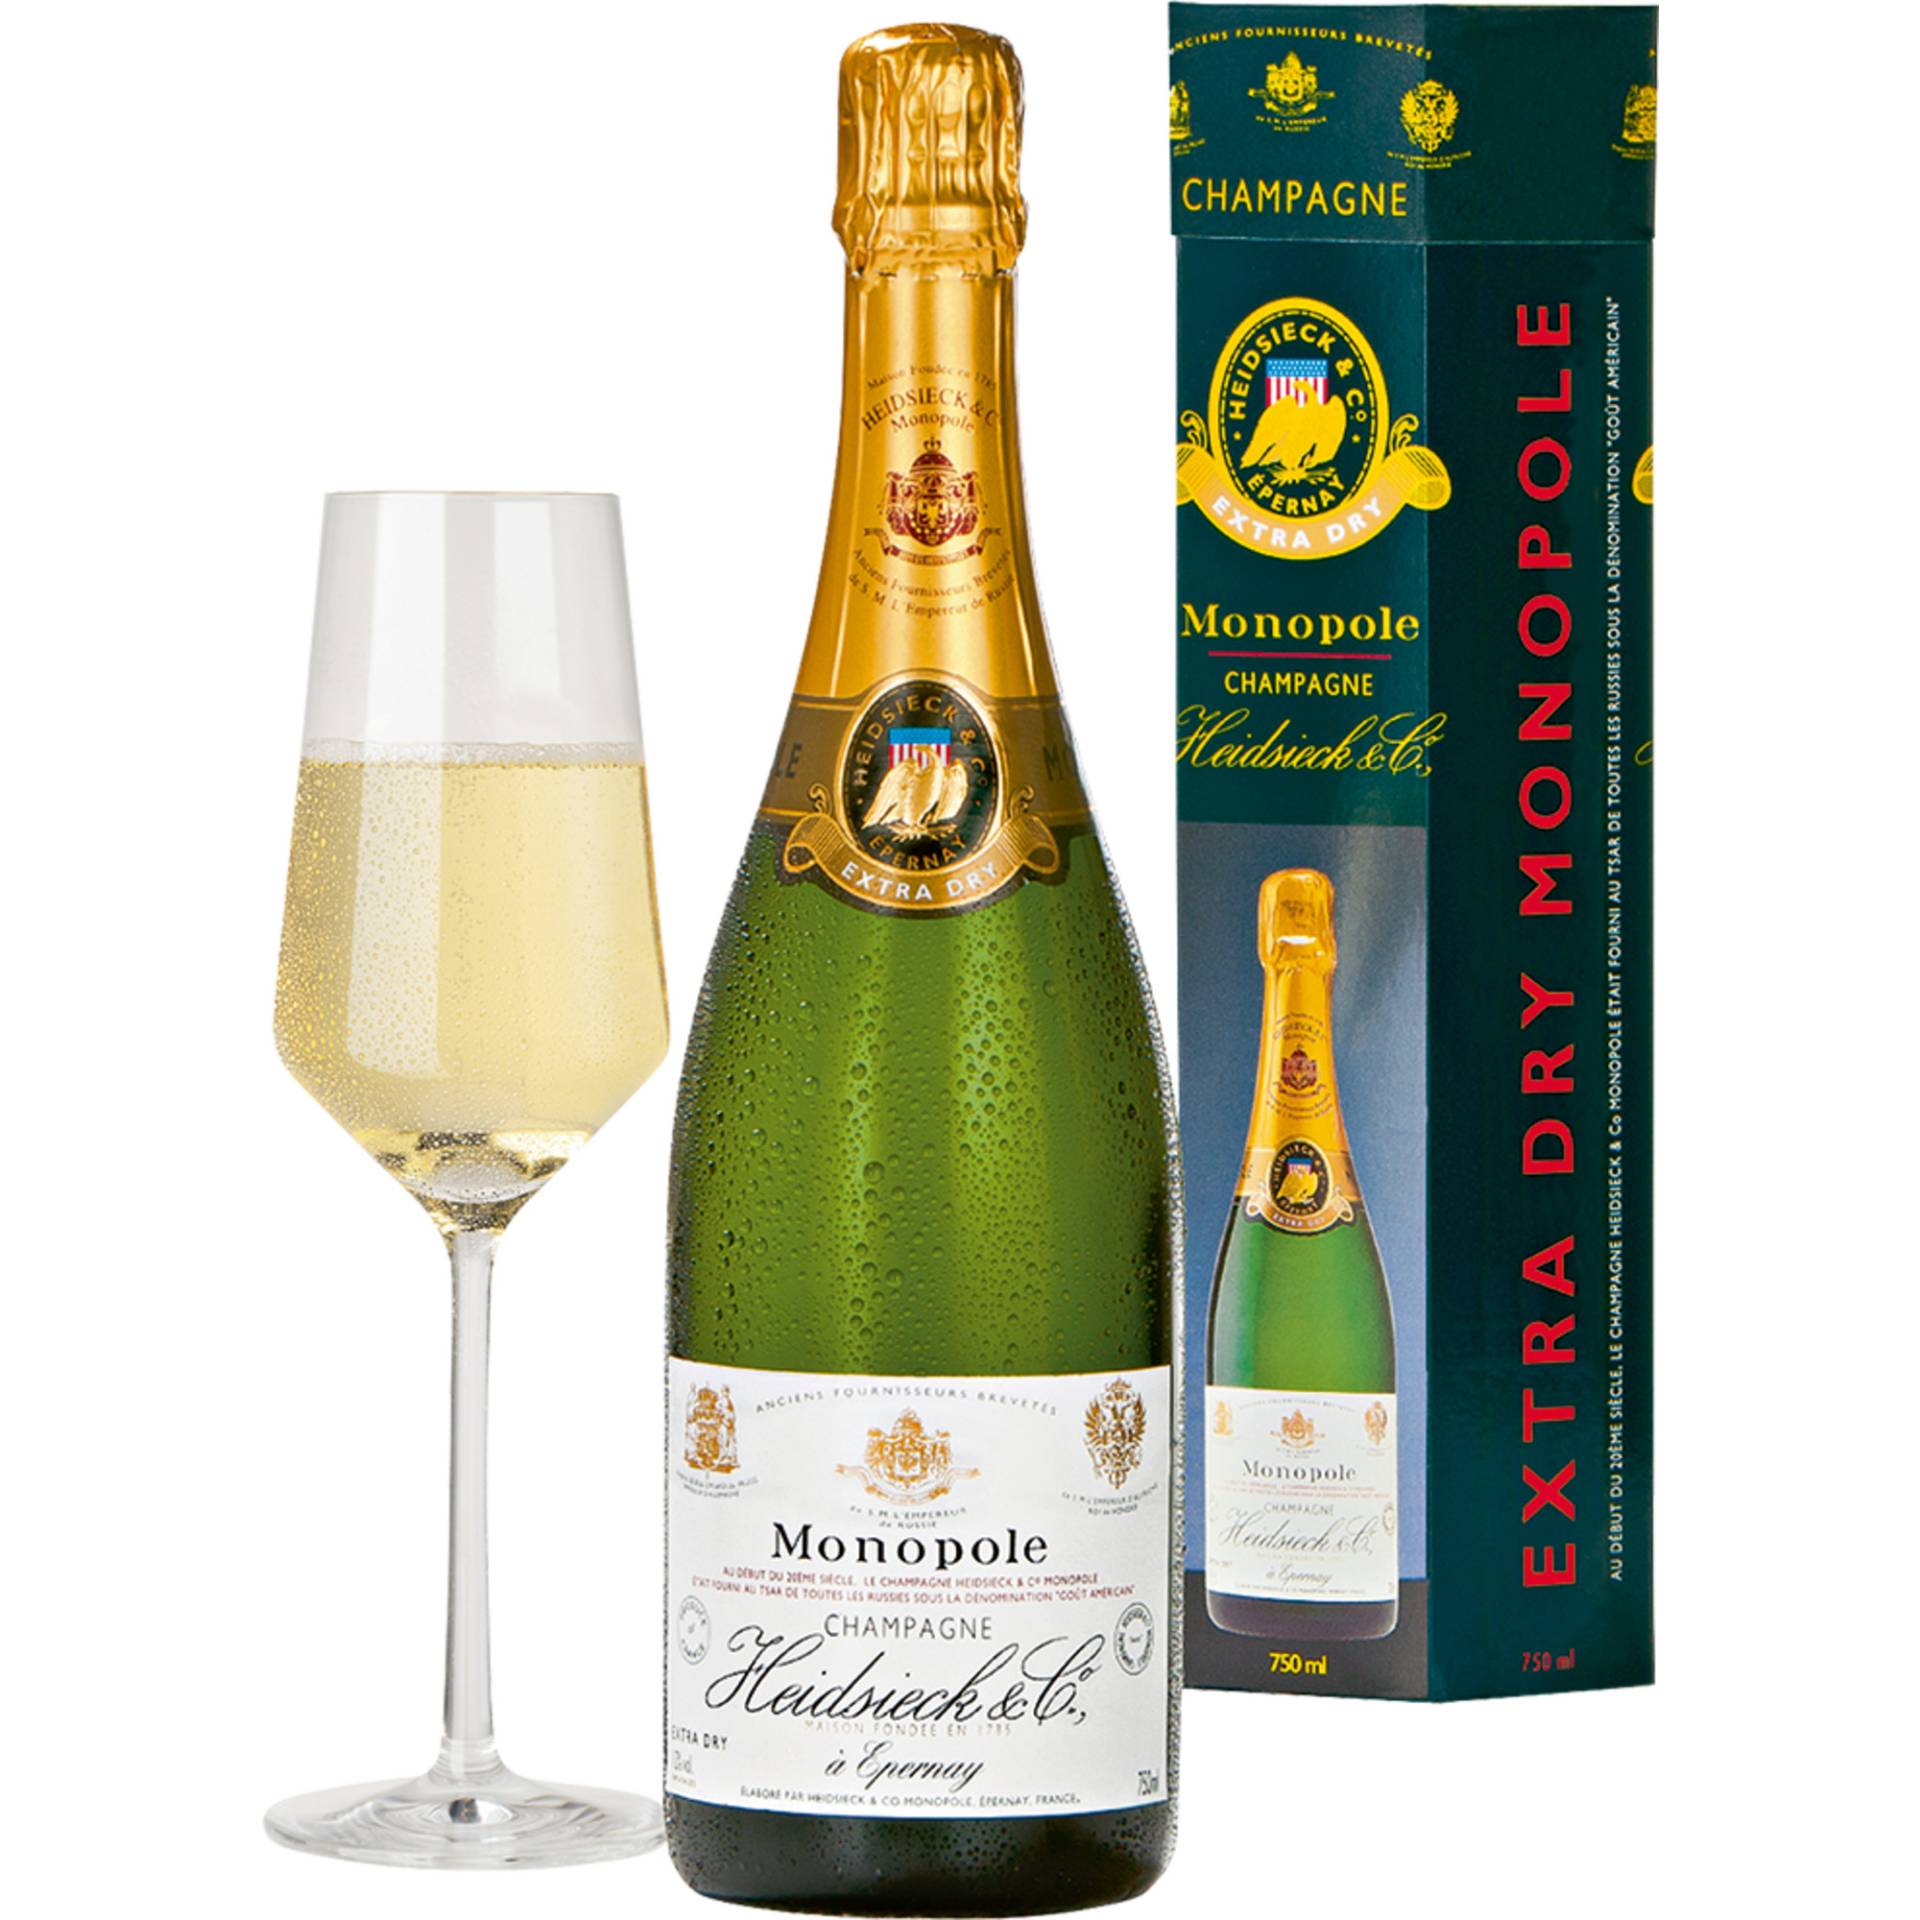 Champagne Heidsieck Monopole, Extra Dry, Champagne AC, Geschenketui, Champagne, Präsente von Heidsieck Monopole & Co., 51100 Reims, France